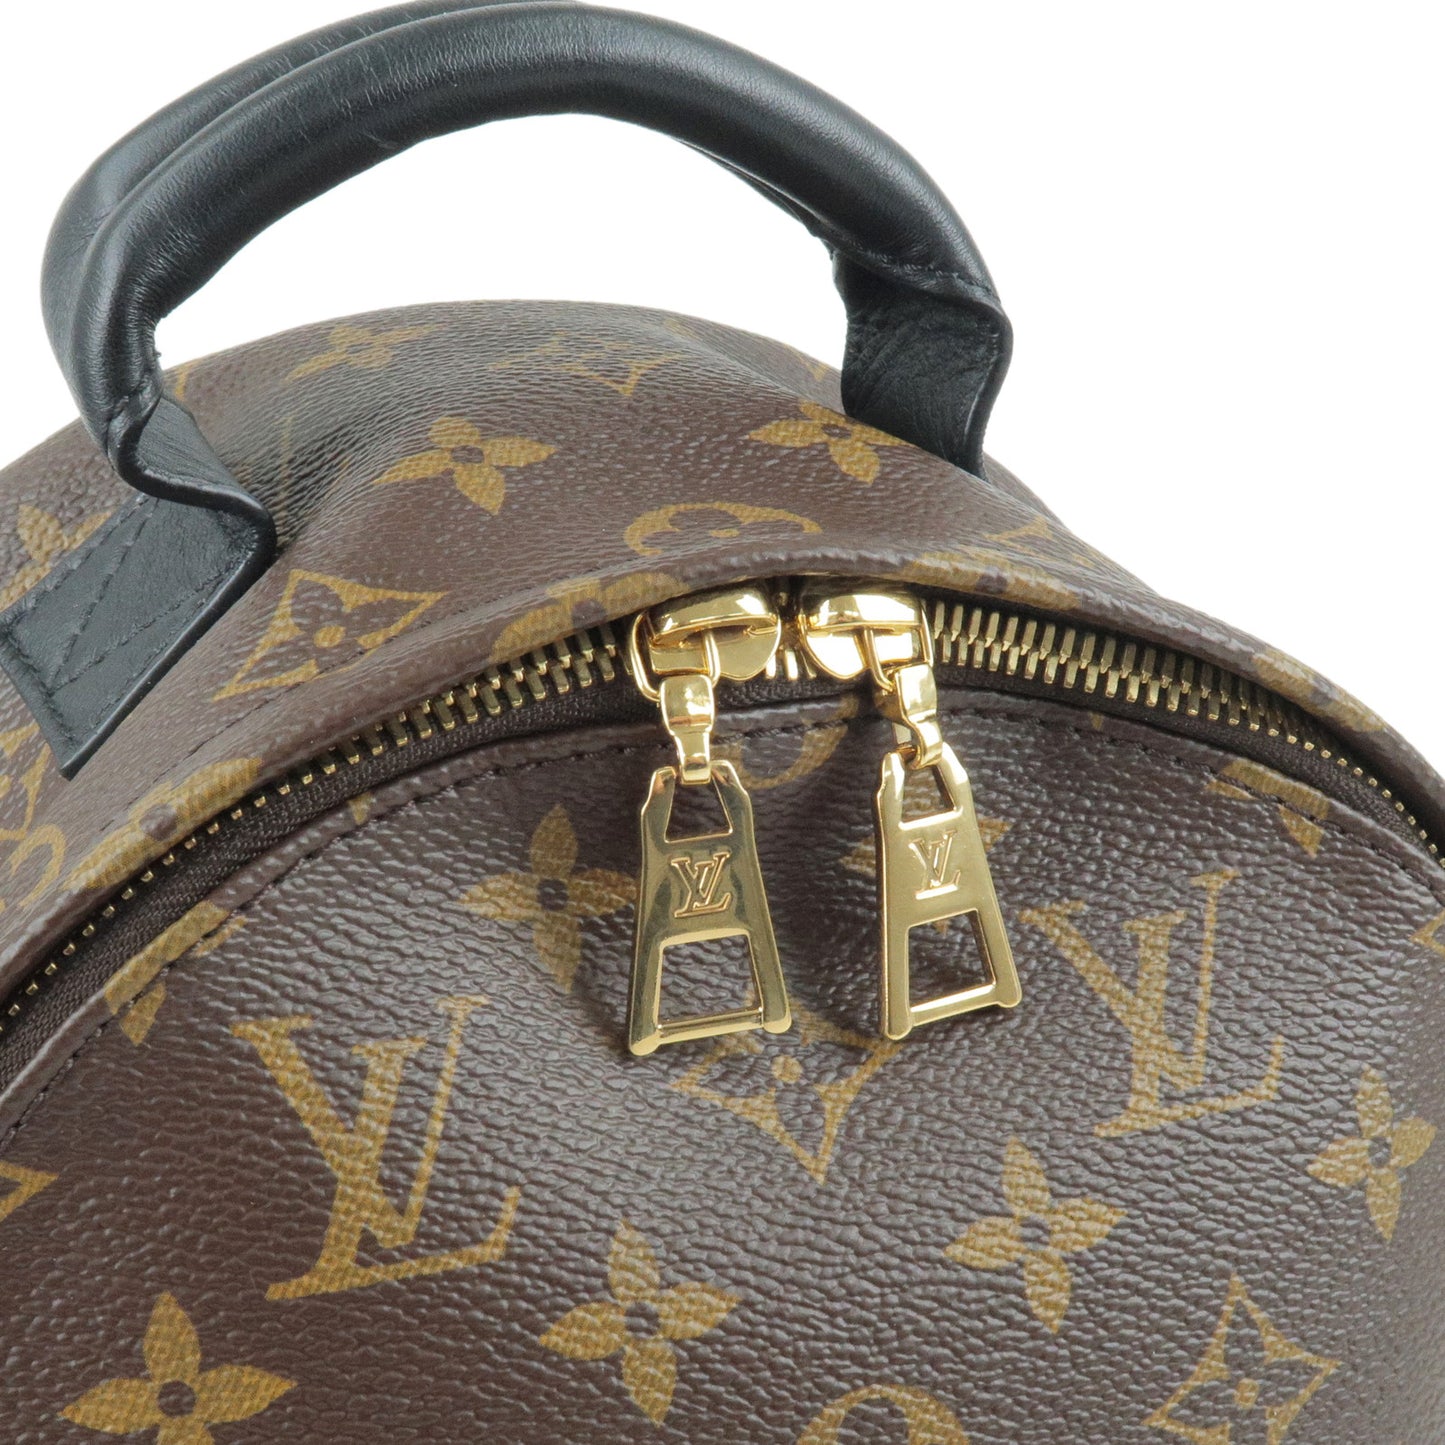 Original Louis Vuitton Tasche Rucksack Männer